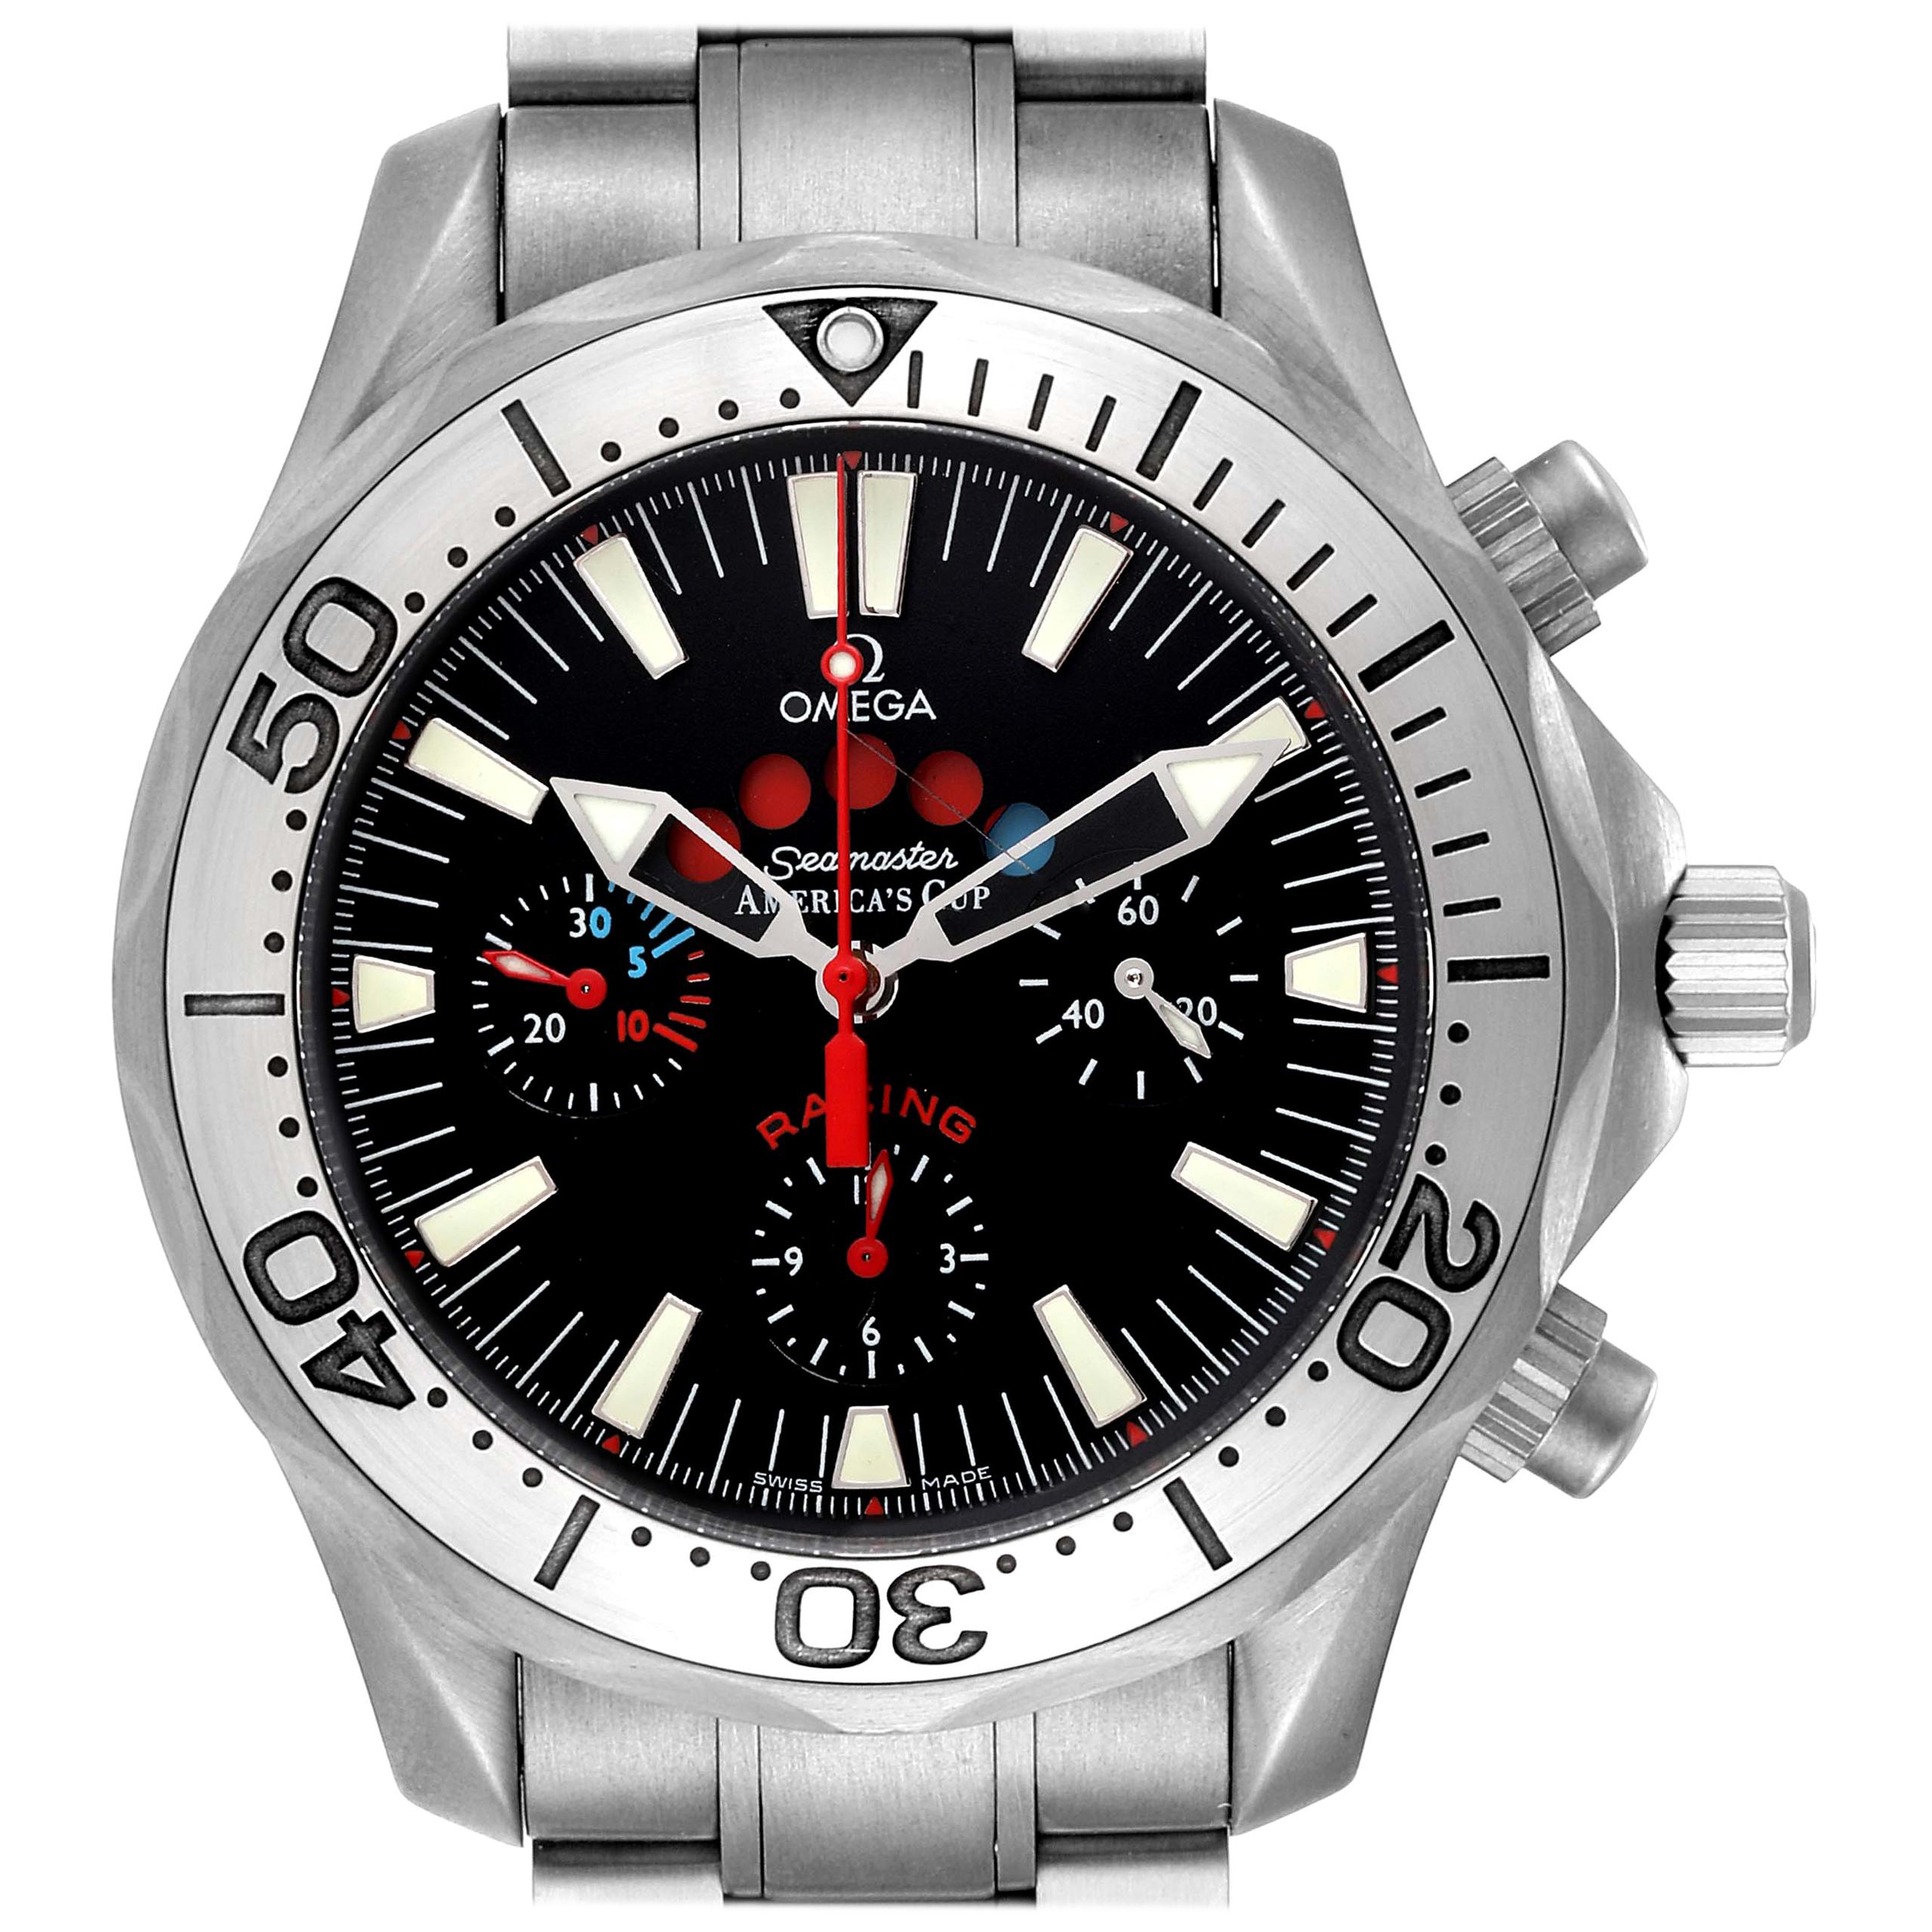 Omega Seamaster Regatta Racing Titanium Men's Watch 2269.52.00 For Sale